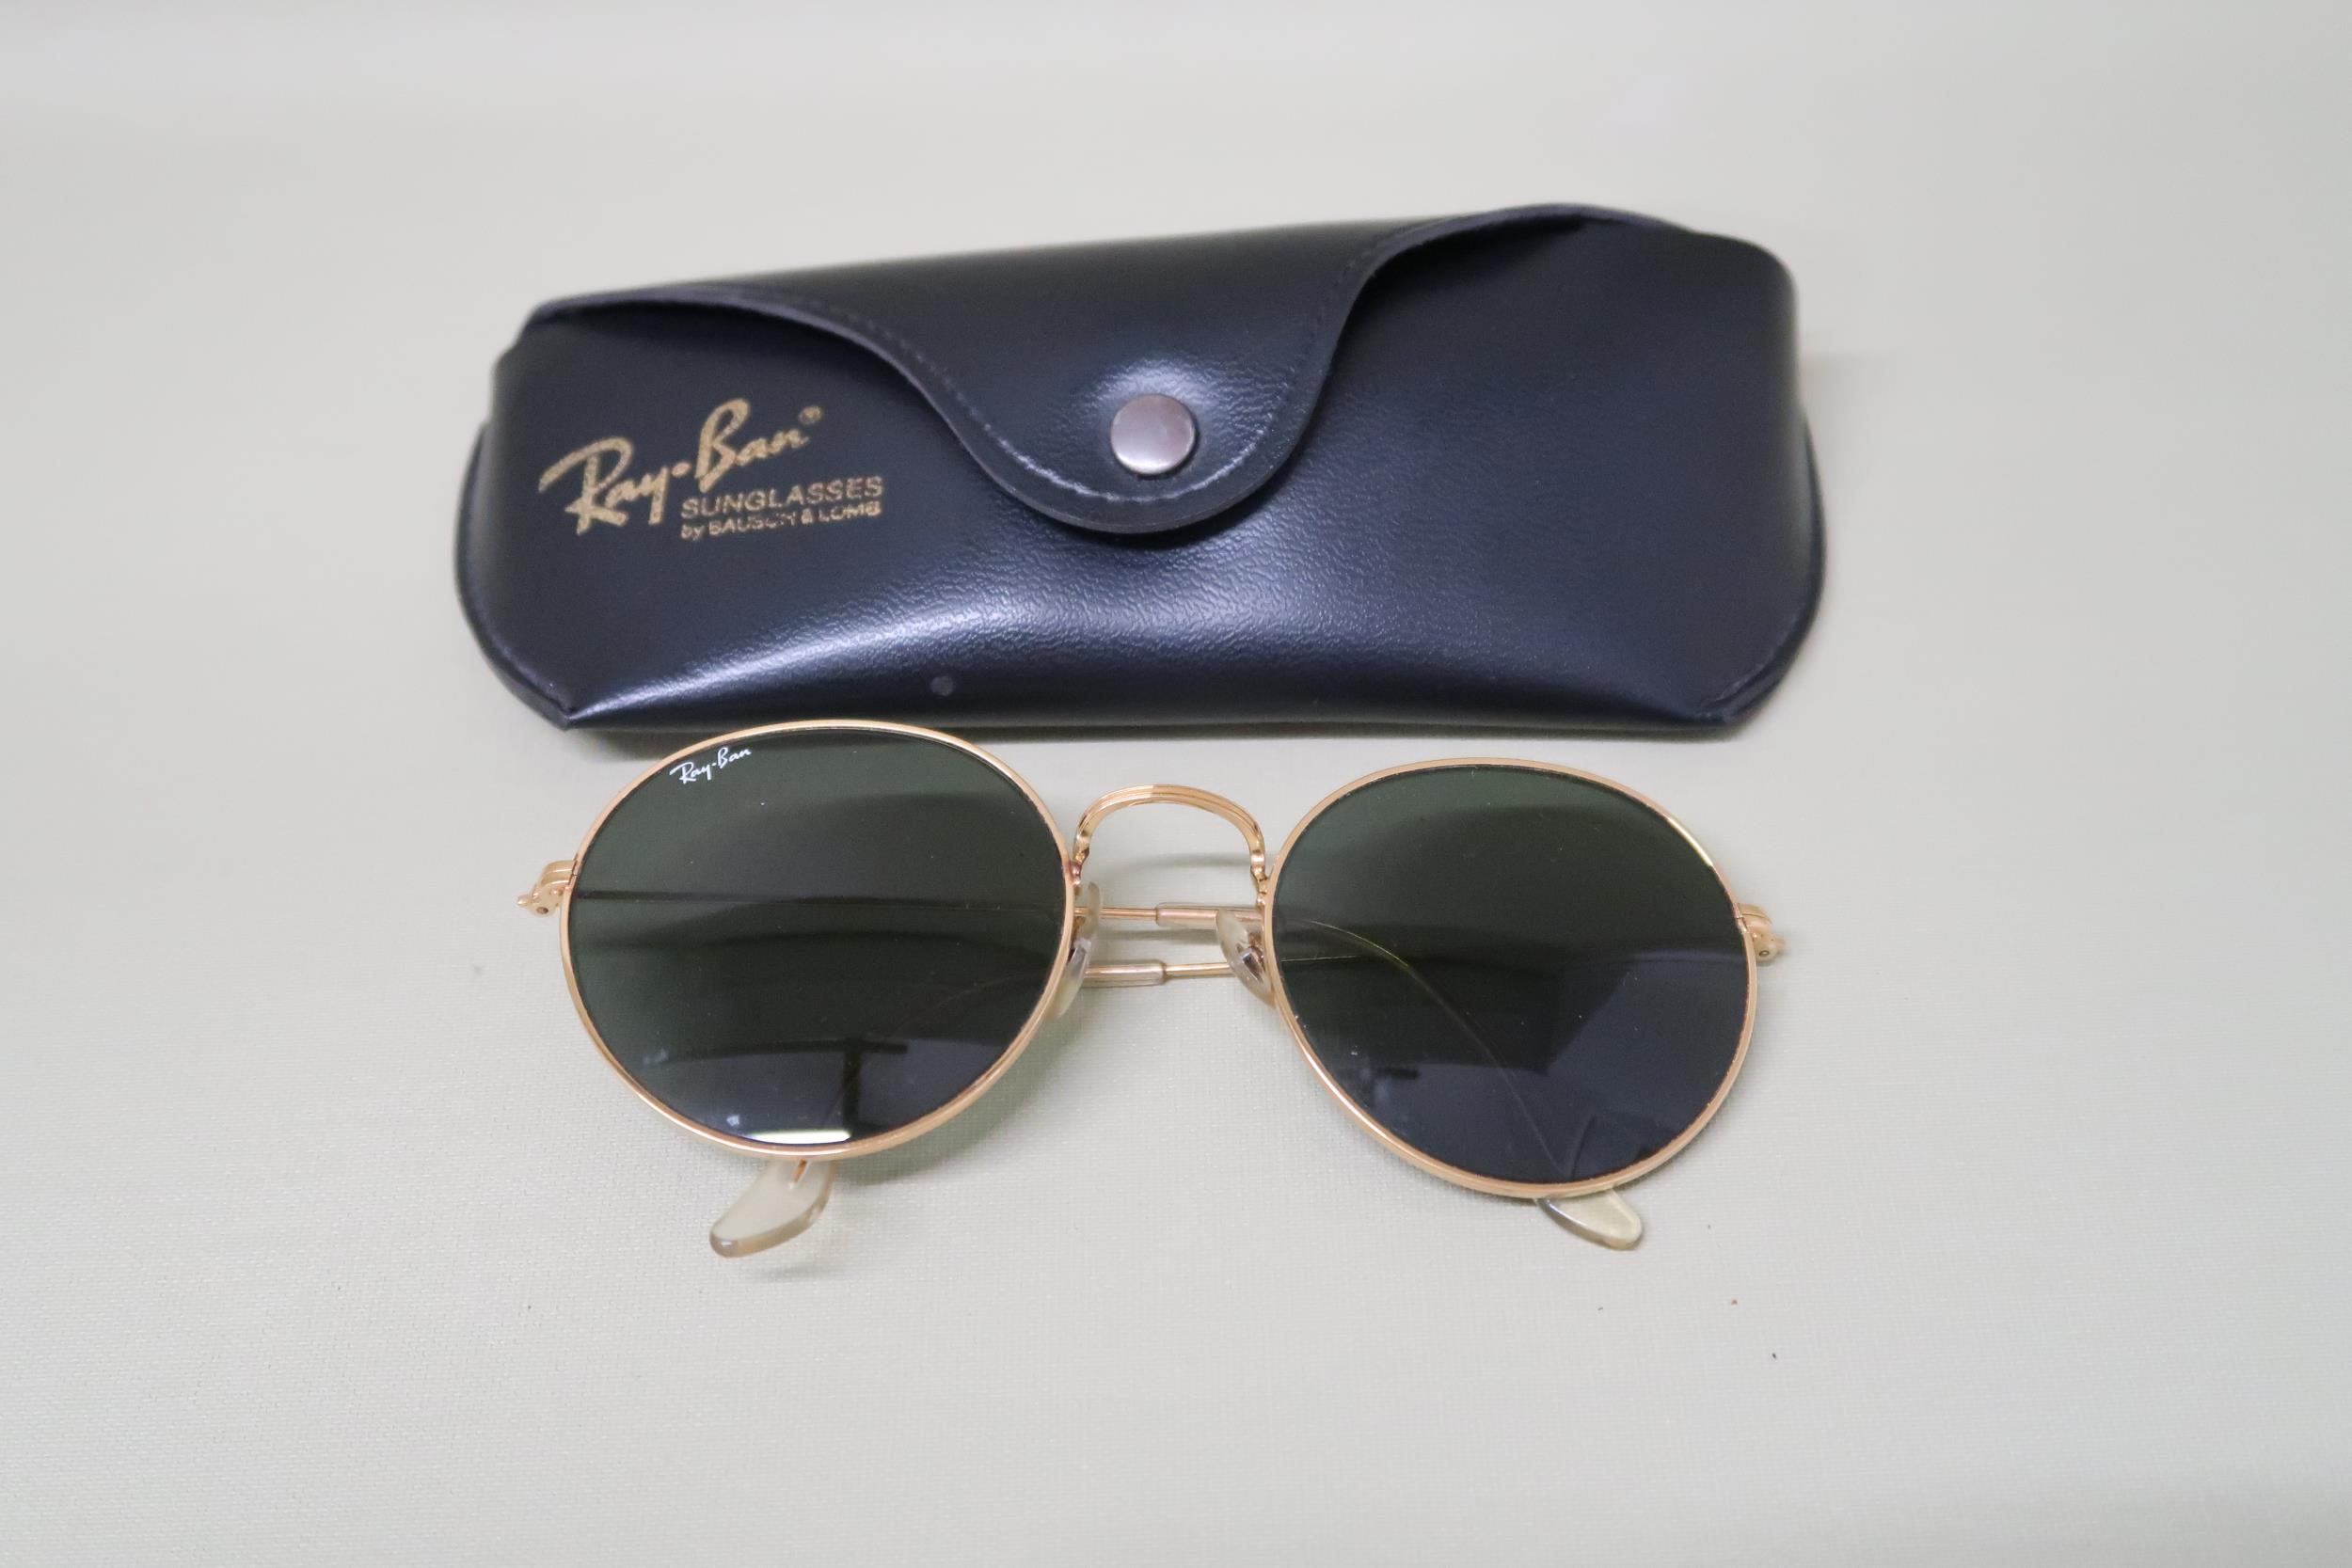 A pair of Ray-ban sunglasses